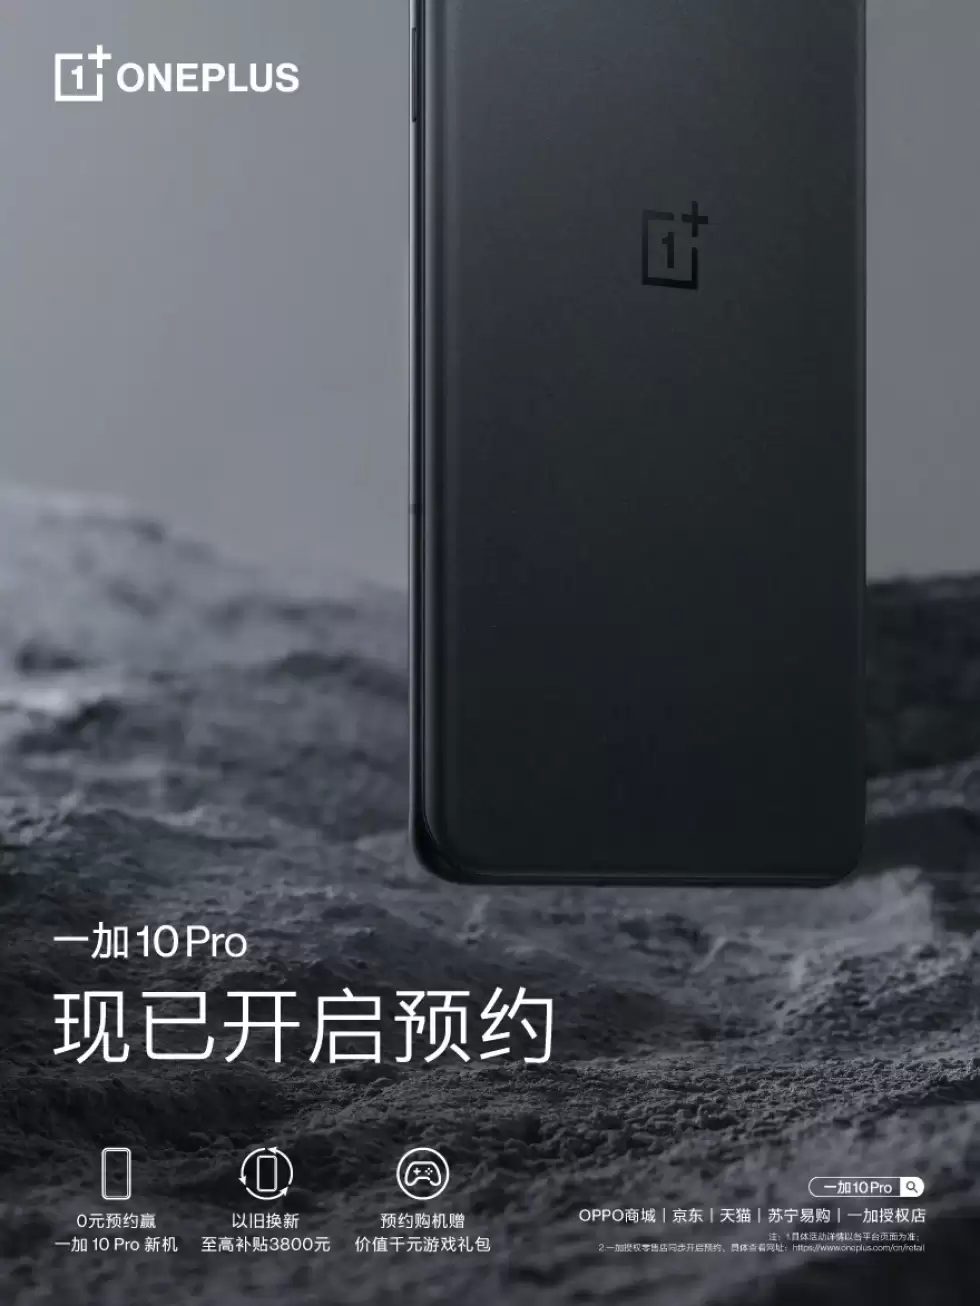 oneplus-10-pro-sale-weibo-img